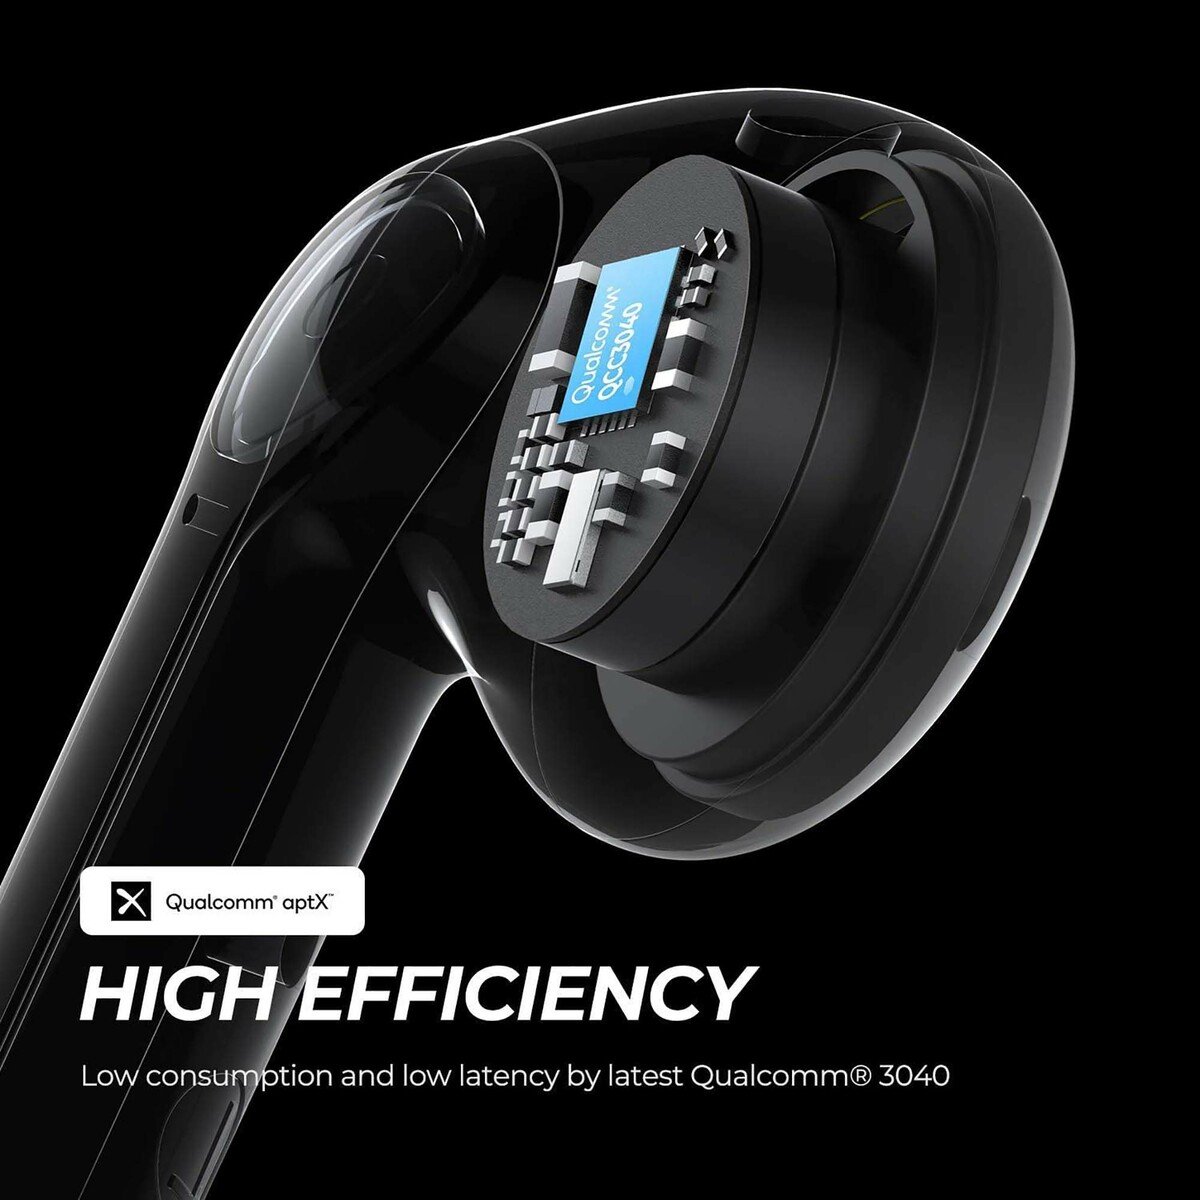 Soundpeats TrueAir2 Wireless Earbuds Black Online at Best Price, Mobile  Hands Free